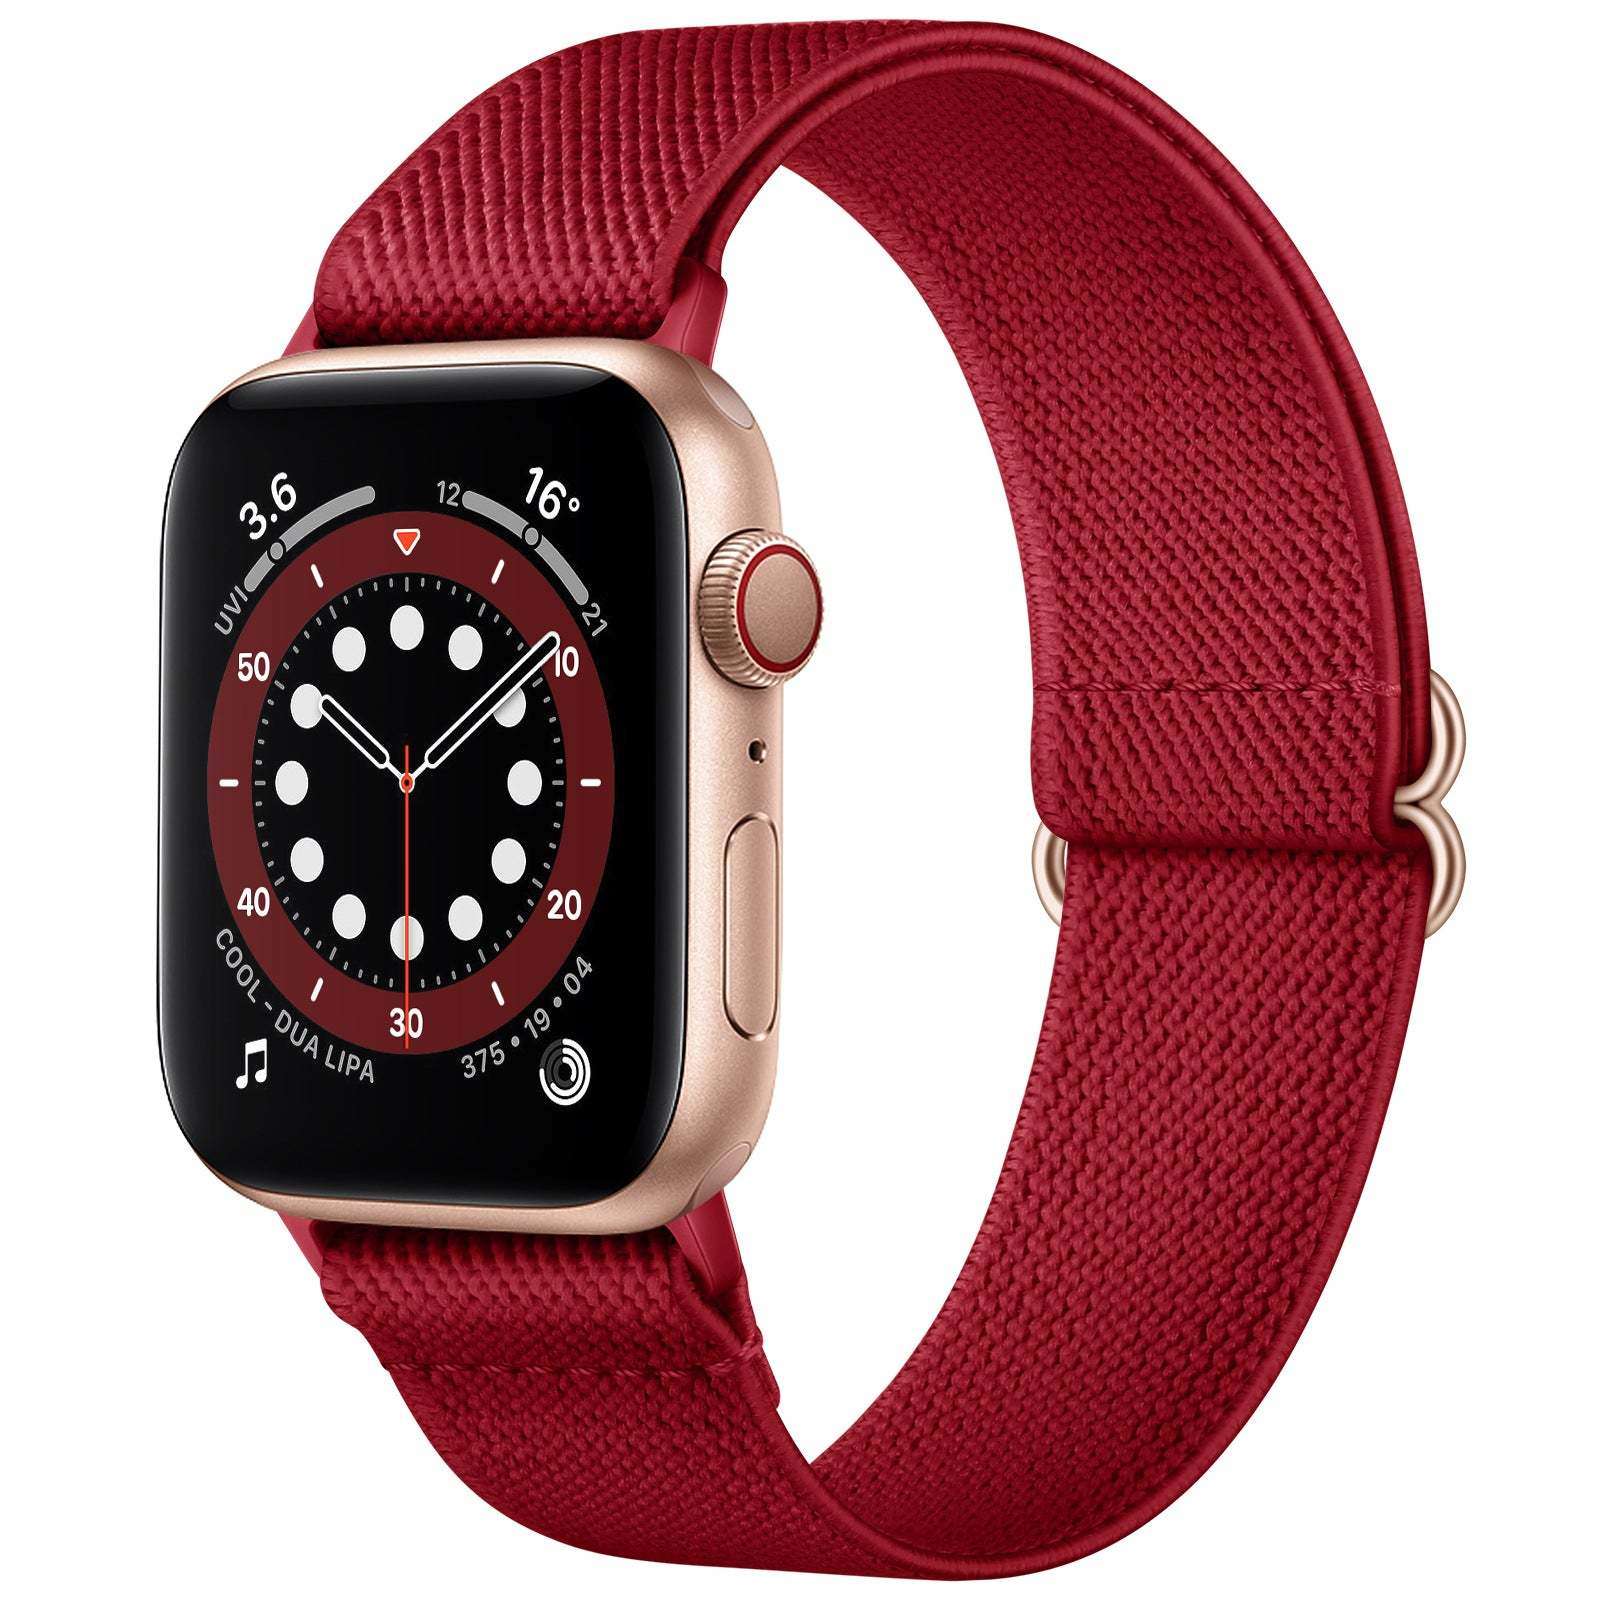 Apple Watch Straps - All Series [Next Day]